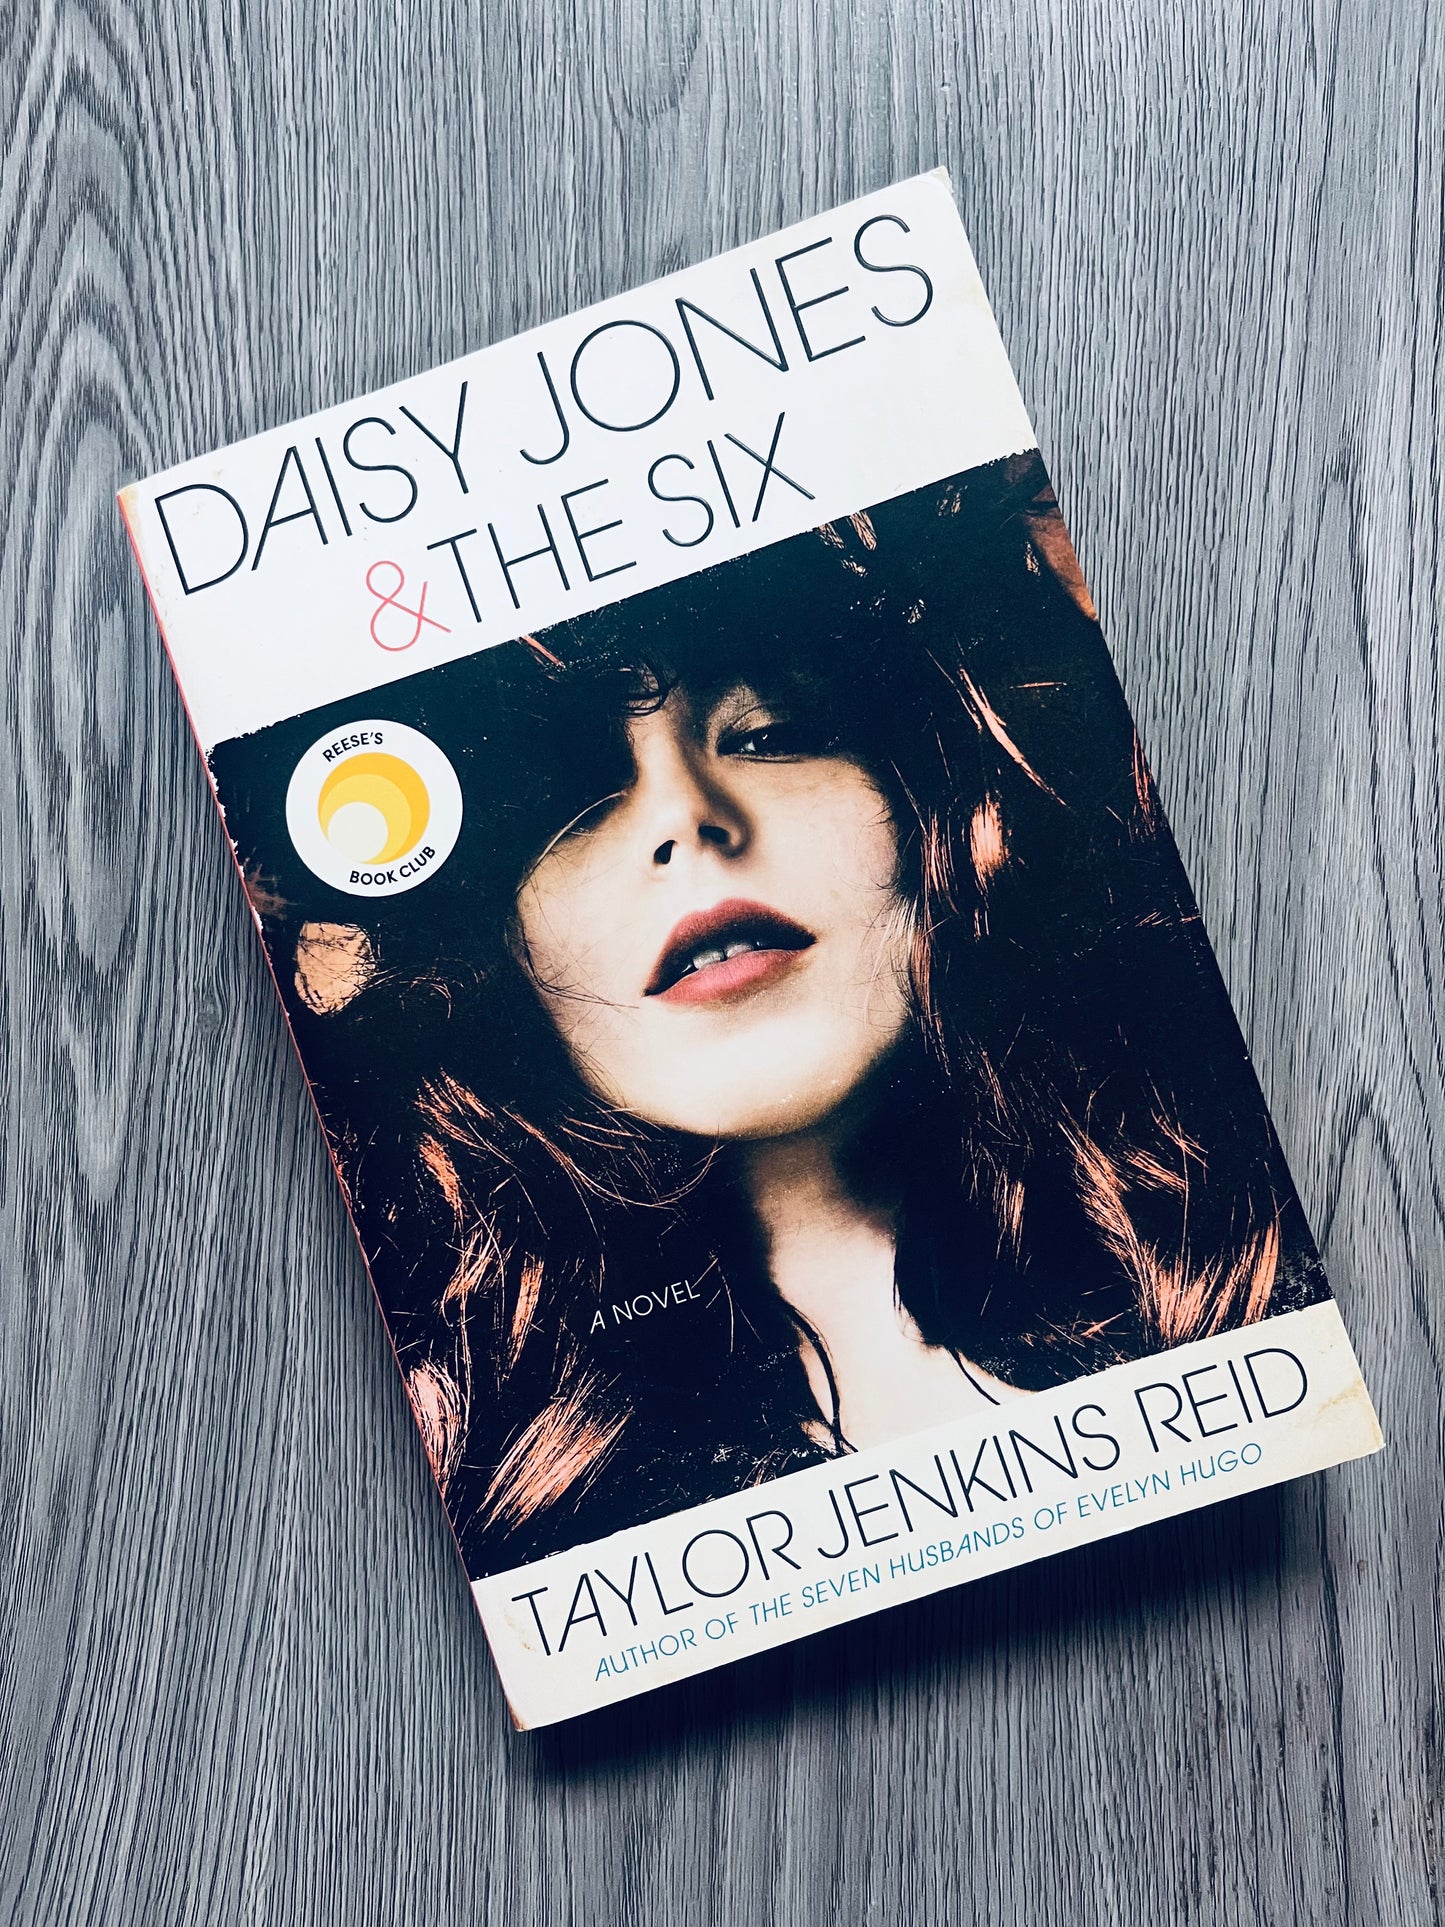 Daisy Jones and the Six by Taylor Jenkins Reid